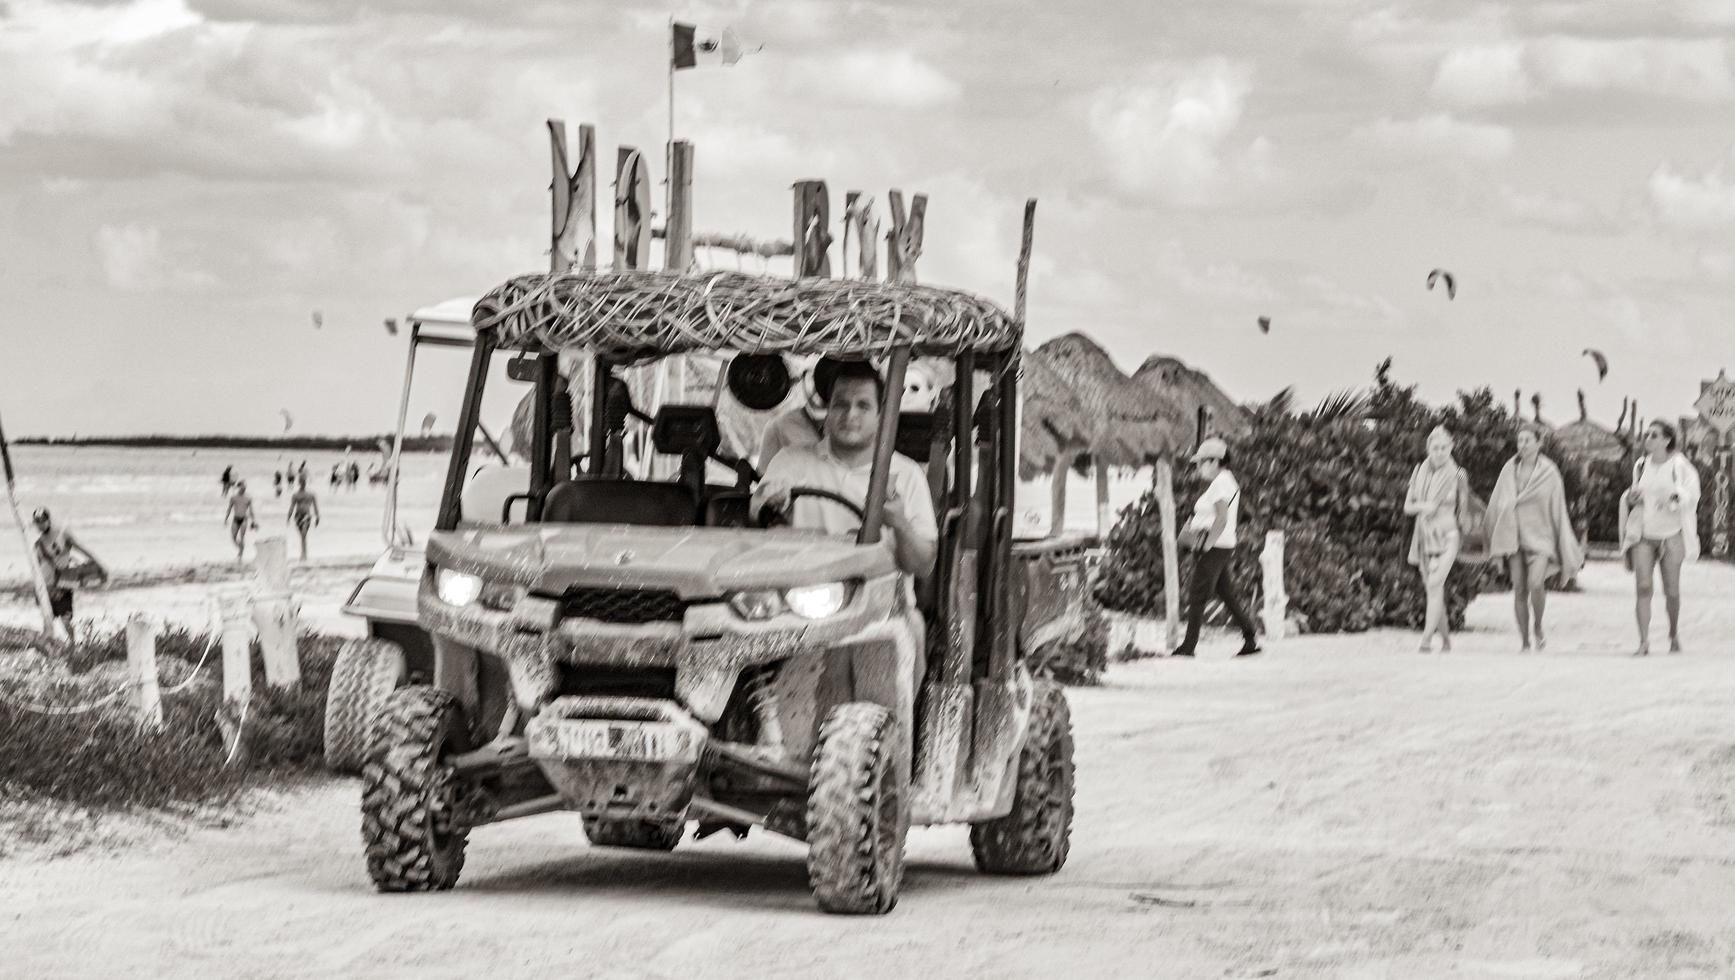 holbox quintana roo mexico 2021 golfbil buggy cars vagnar muddy street beach holbox mexico. foto